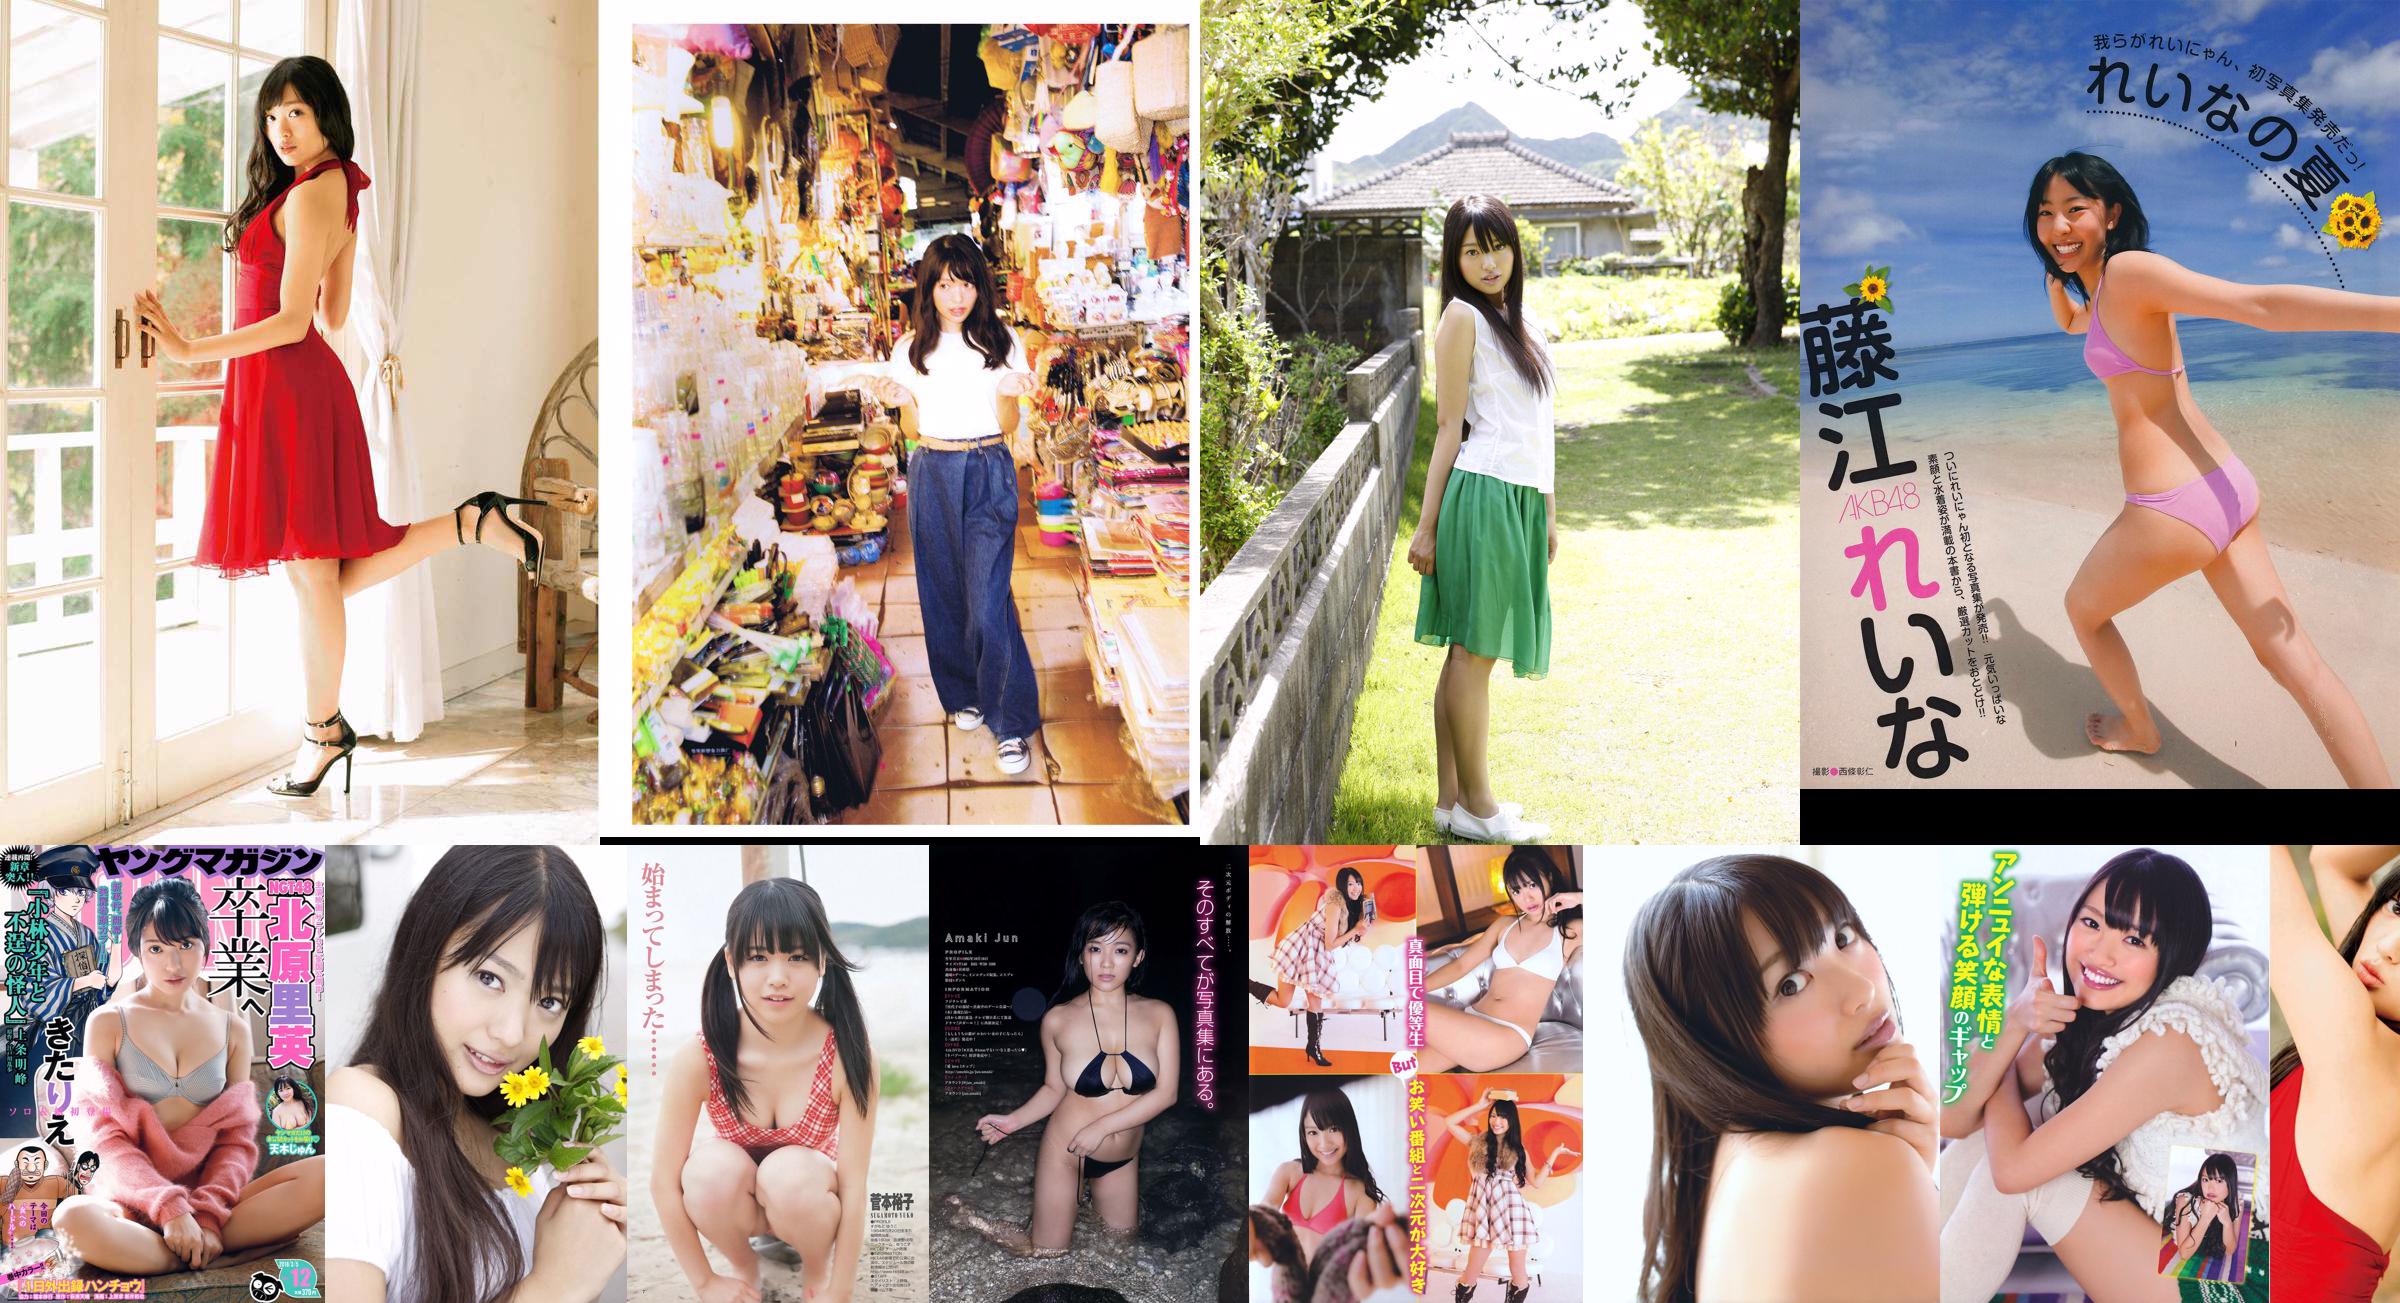 [EX Taishu] Rie Kitahara Serina KONAN Yumi Fujikoso 2011 nr 08 Zdjęcie No.6cb4fb Strona 6